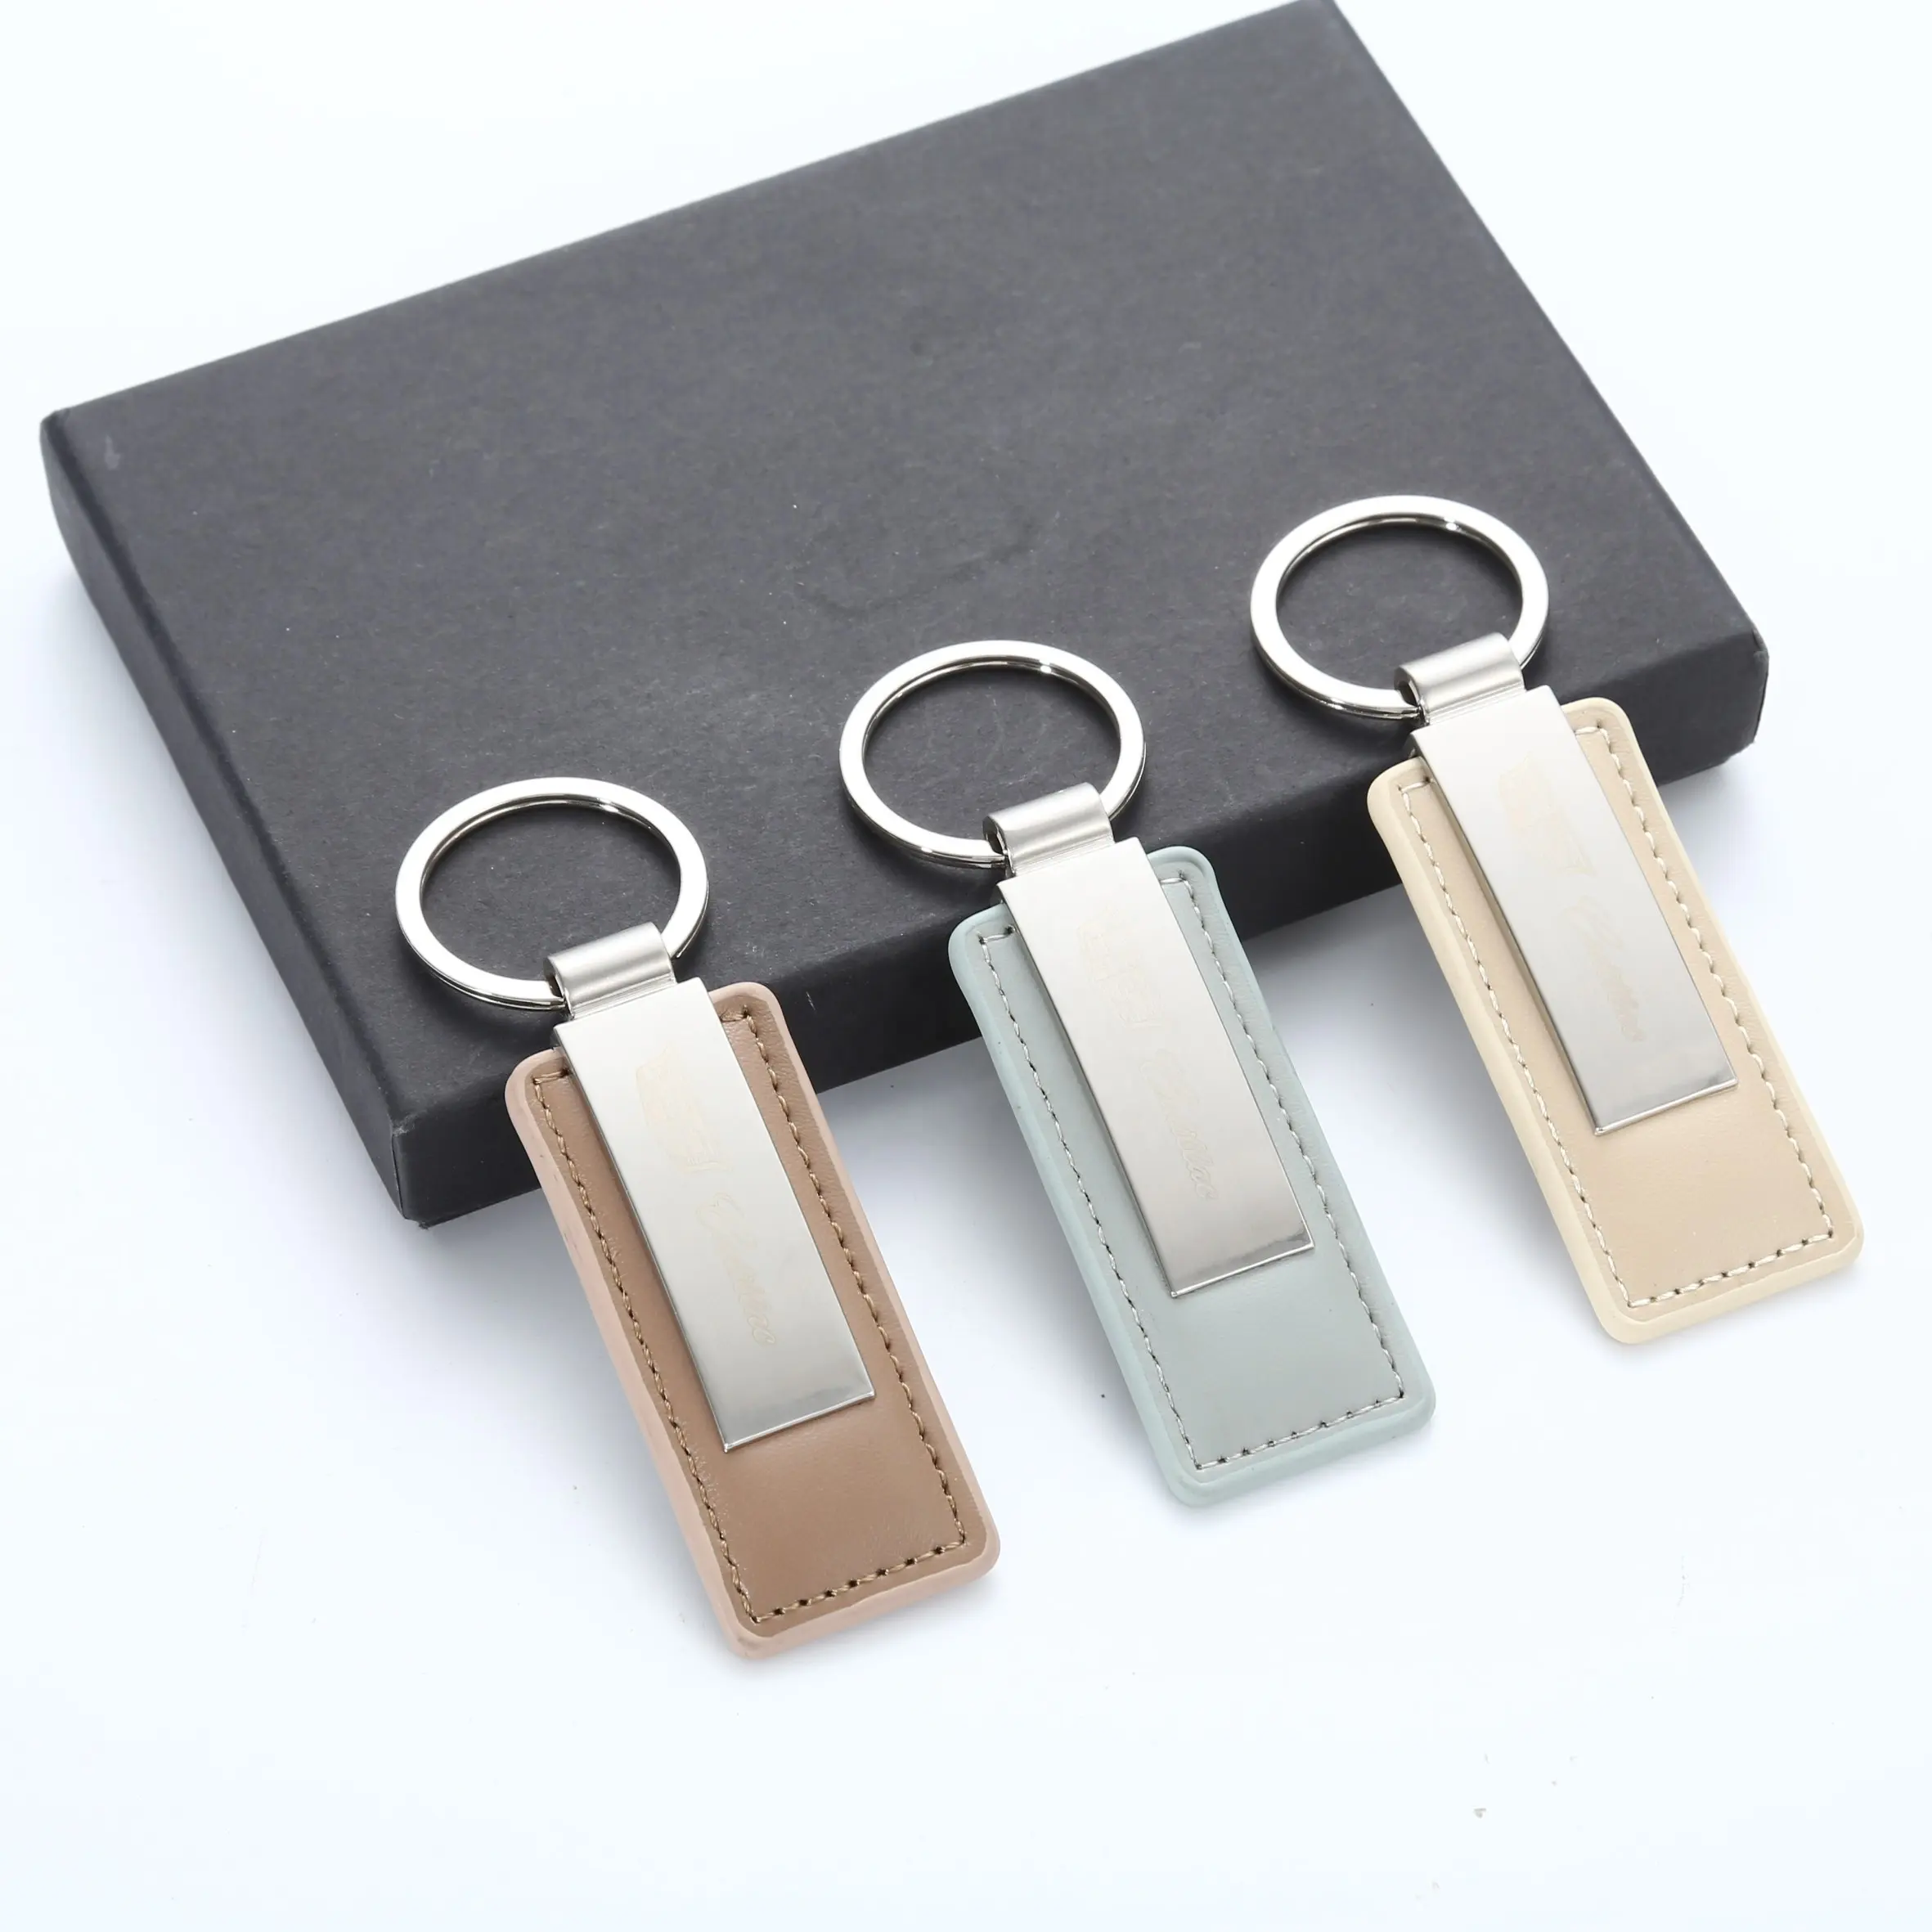 Llavero de cuero-حلقة مفاتيح من الجلد الطبيعي, حلقة مفاتيح من الجلد الطبيعي تُصمم حسب الطلب وتصلح كهدية